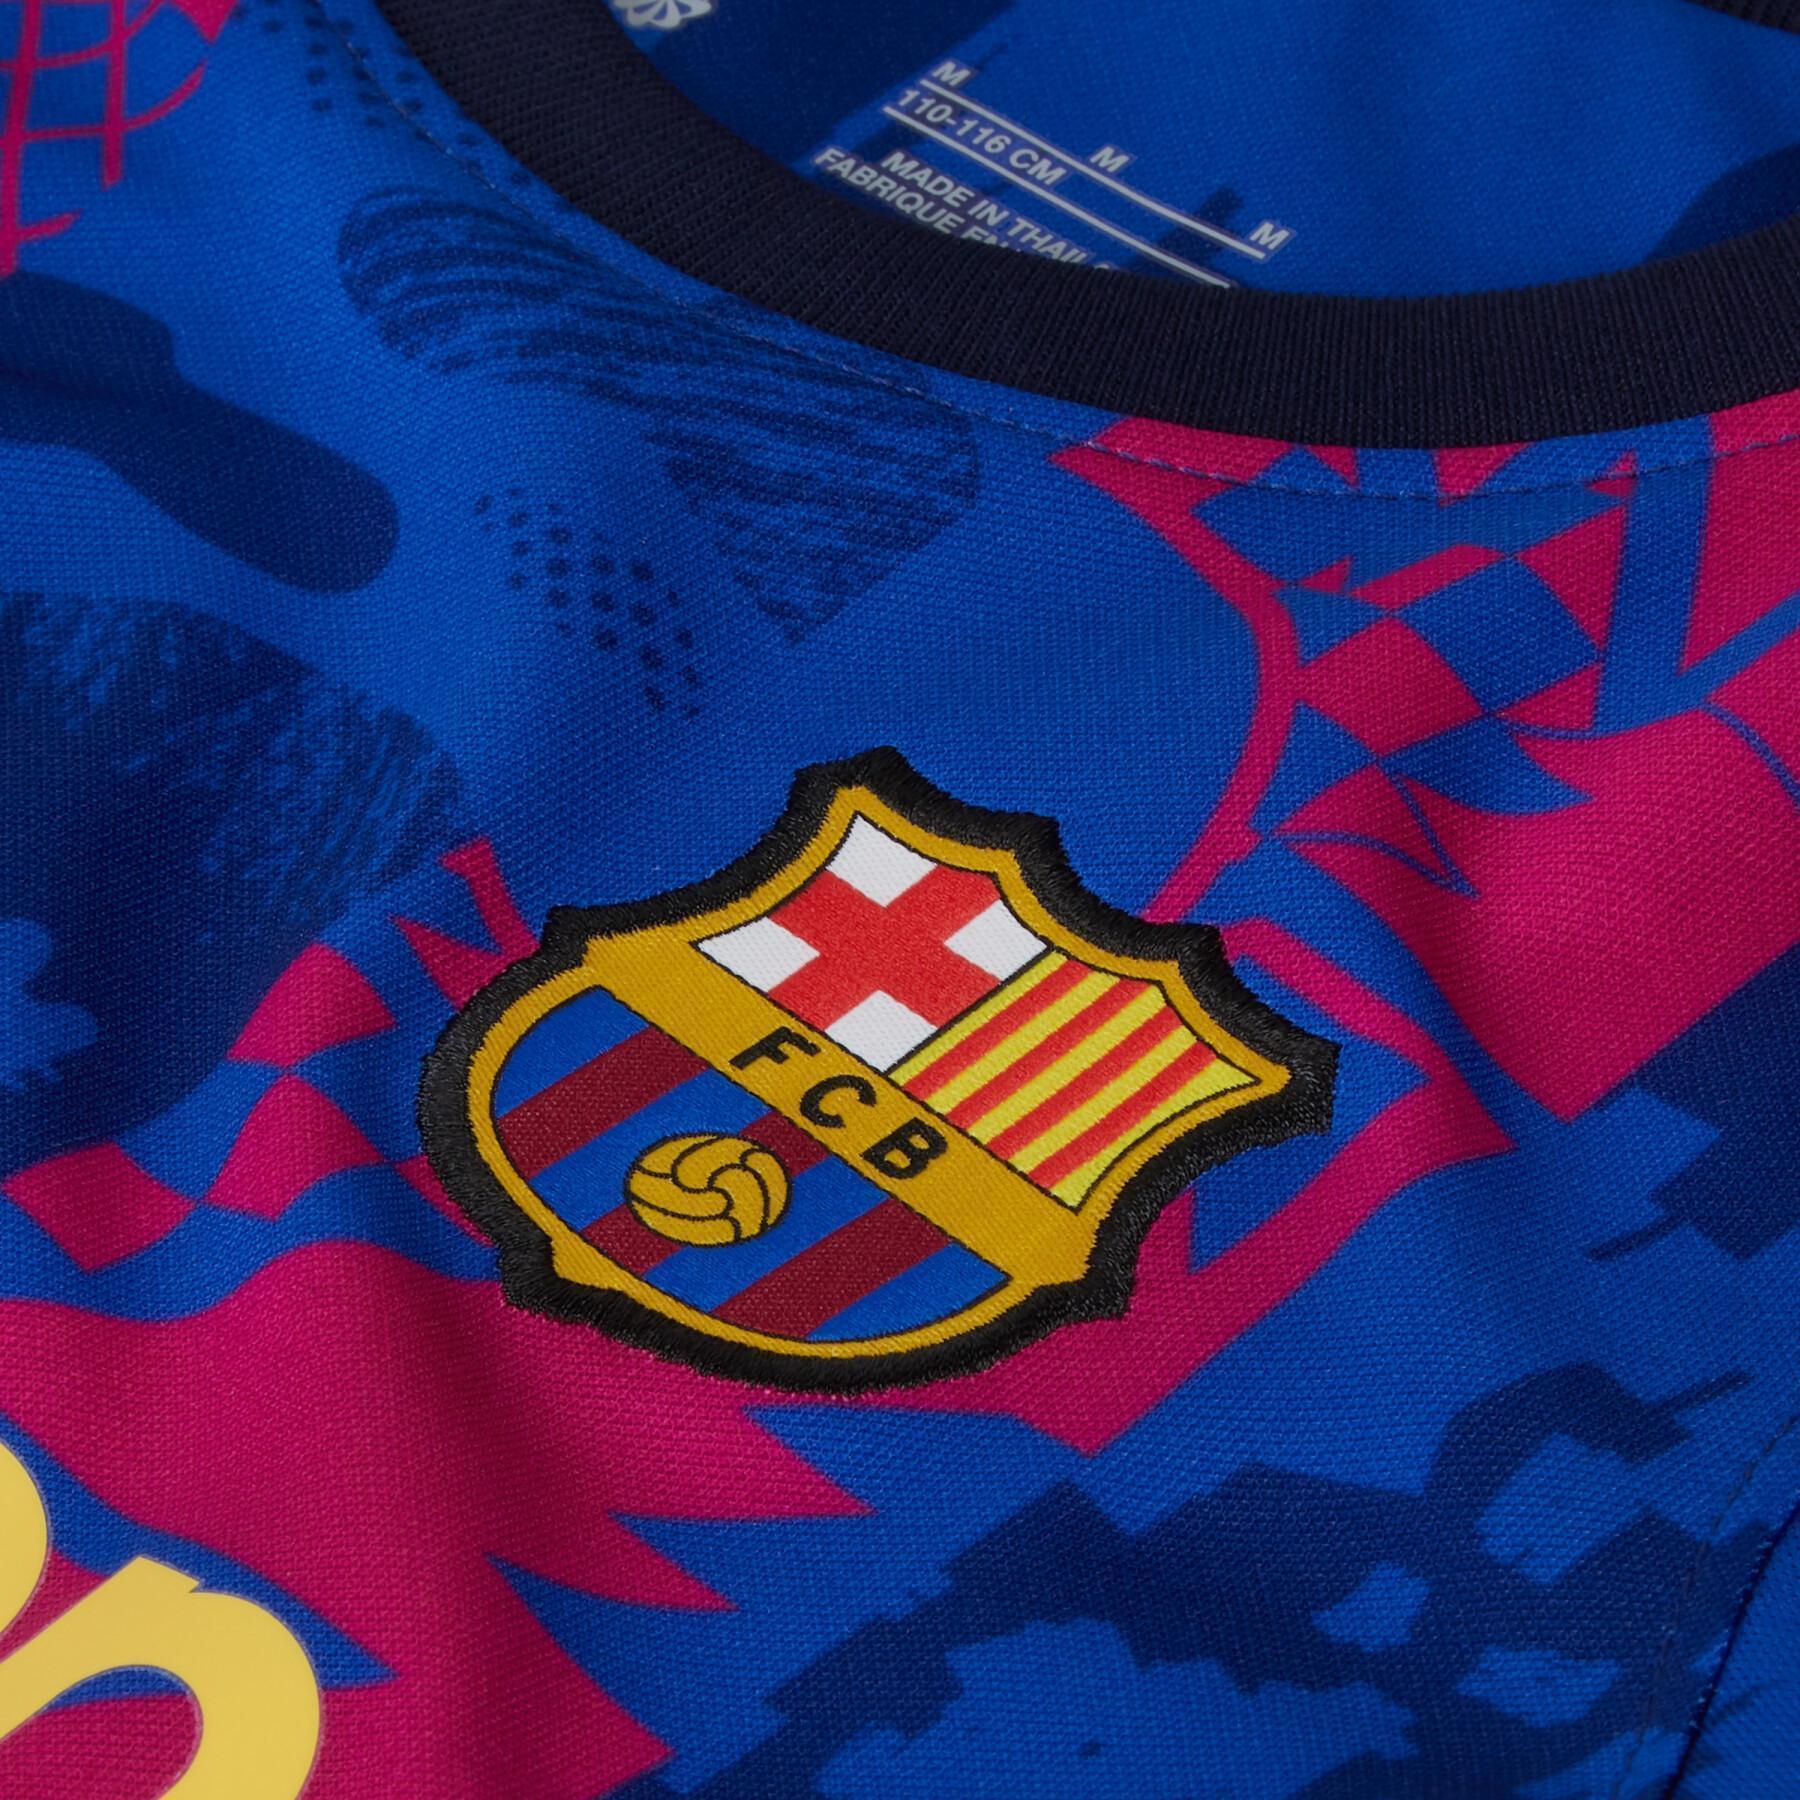 Mini-kit criança terceiro FC Barcelone 2021/22